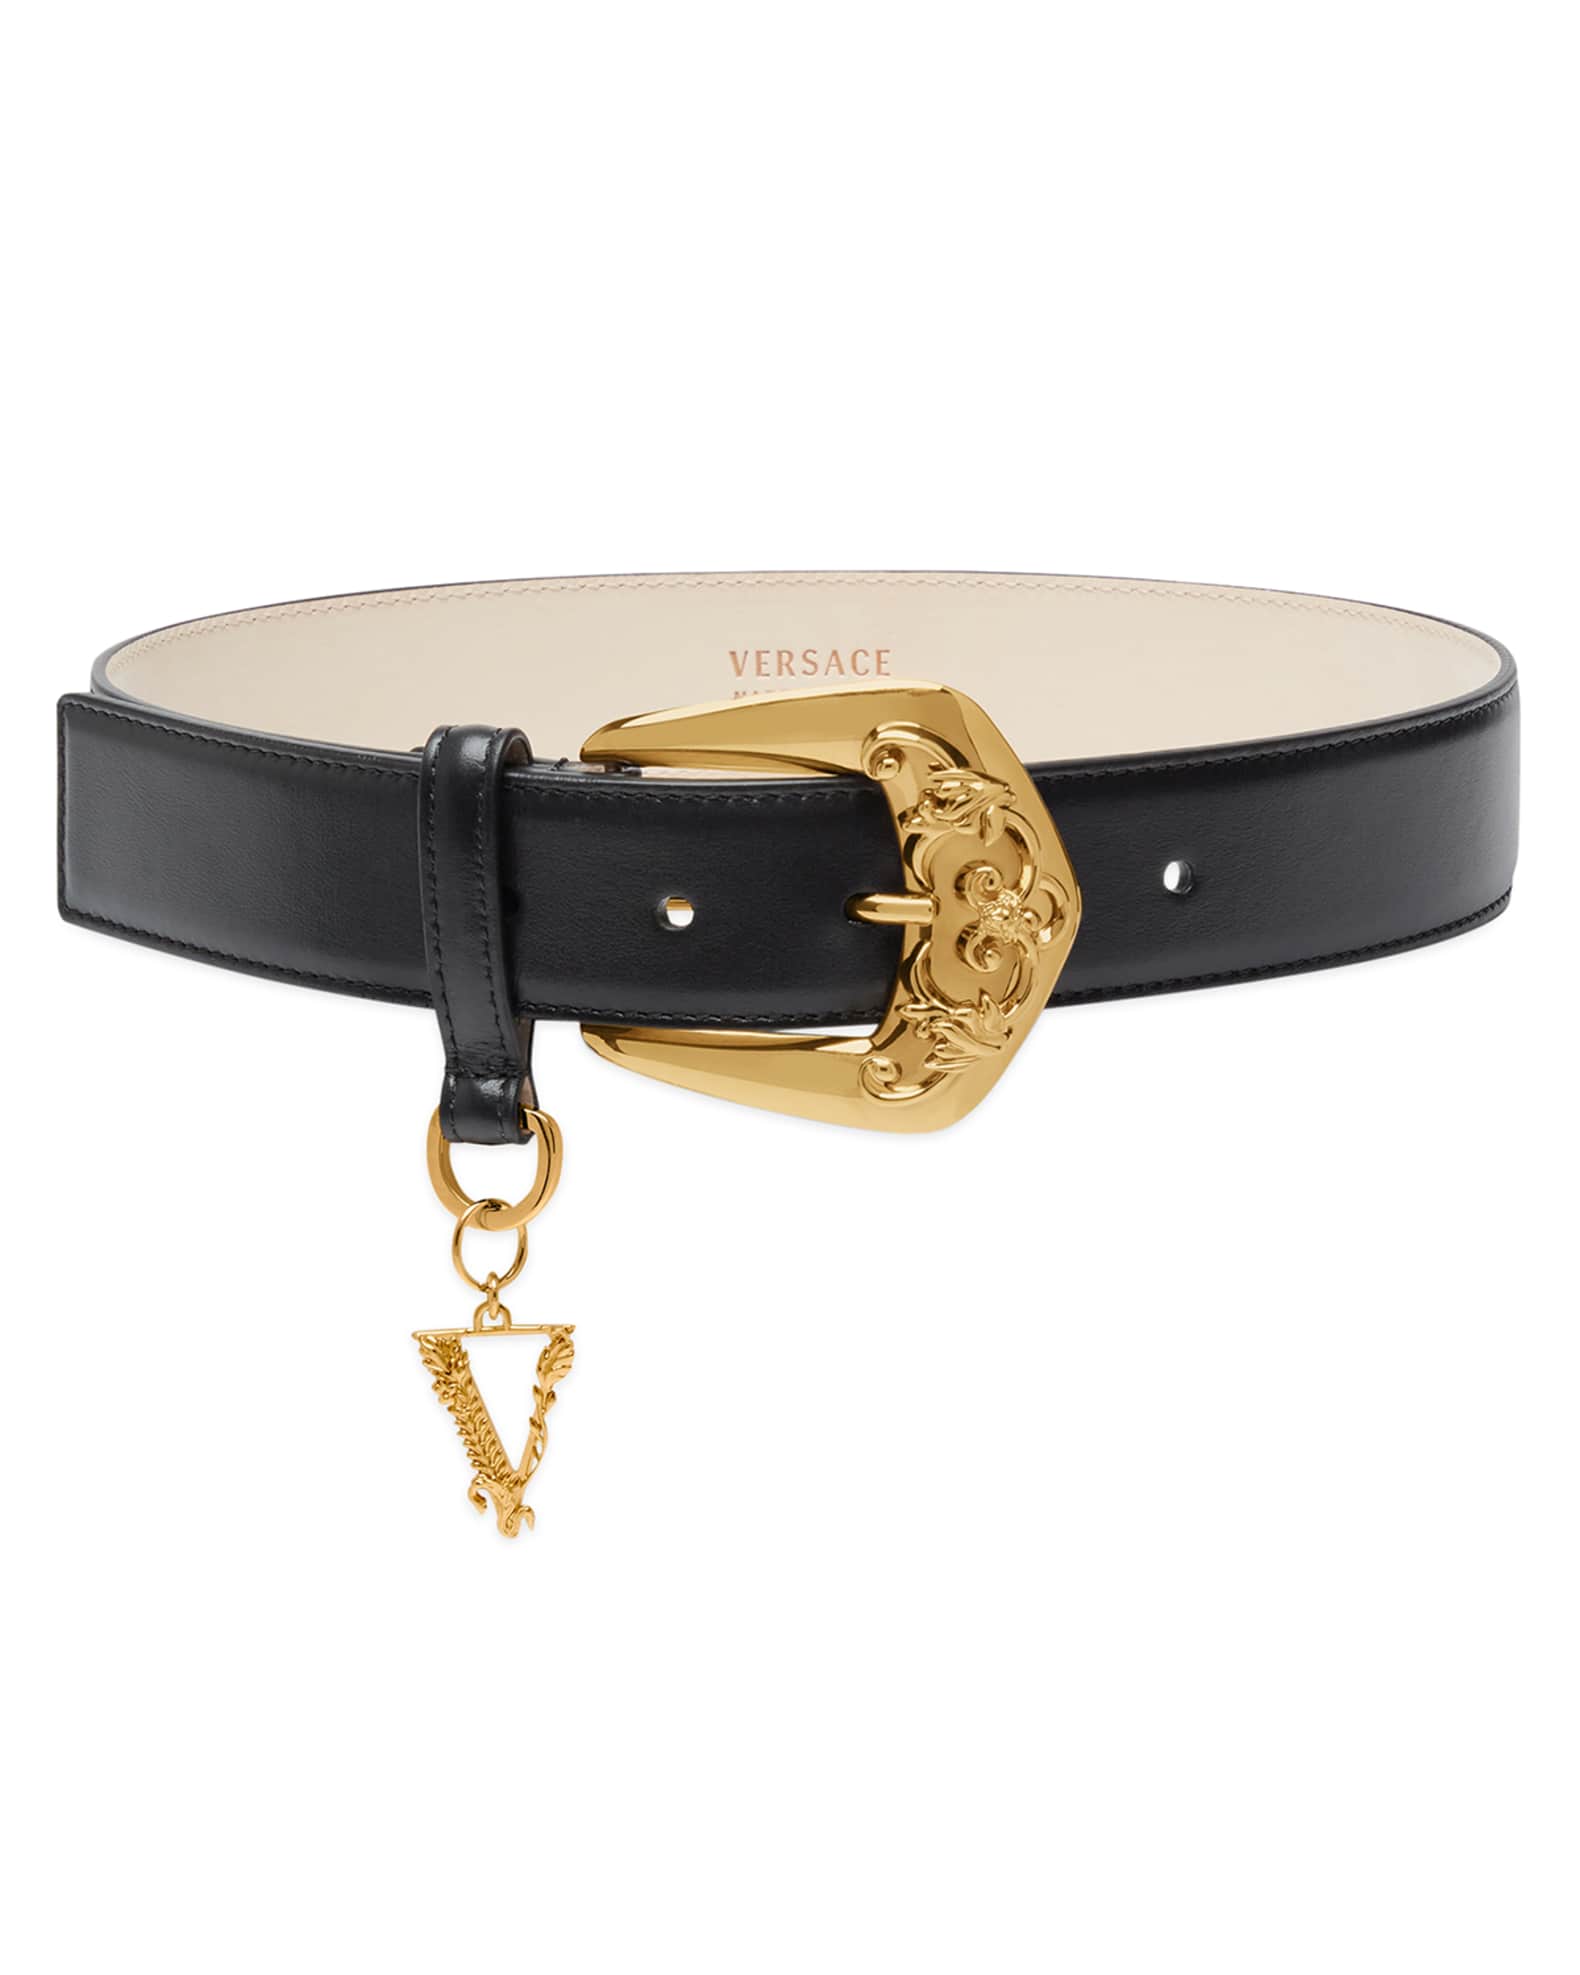 Versace Barocco 35mm Leather Belt | Neiman Marcus